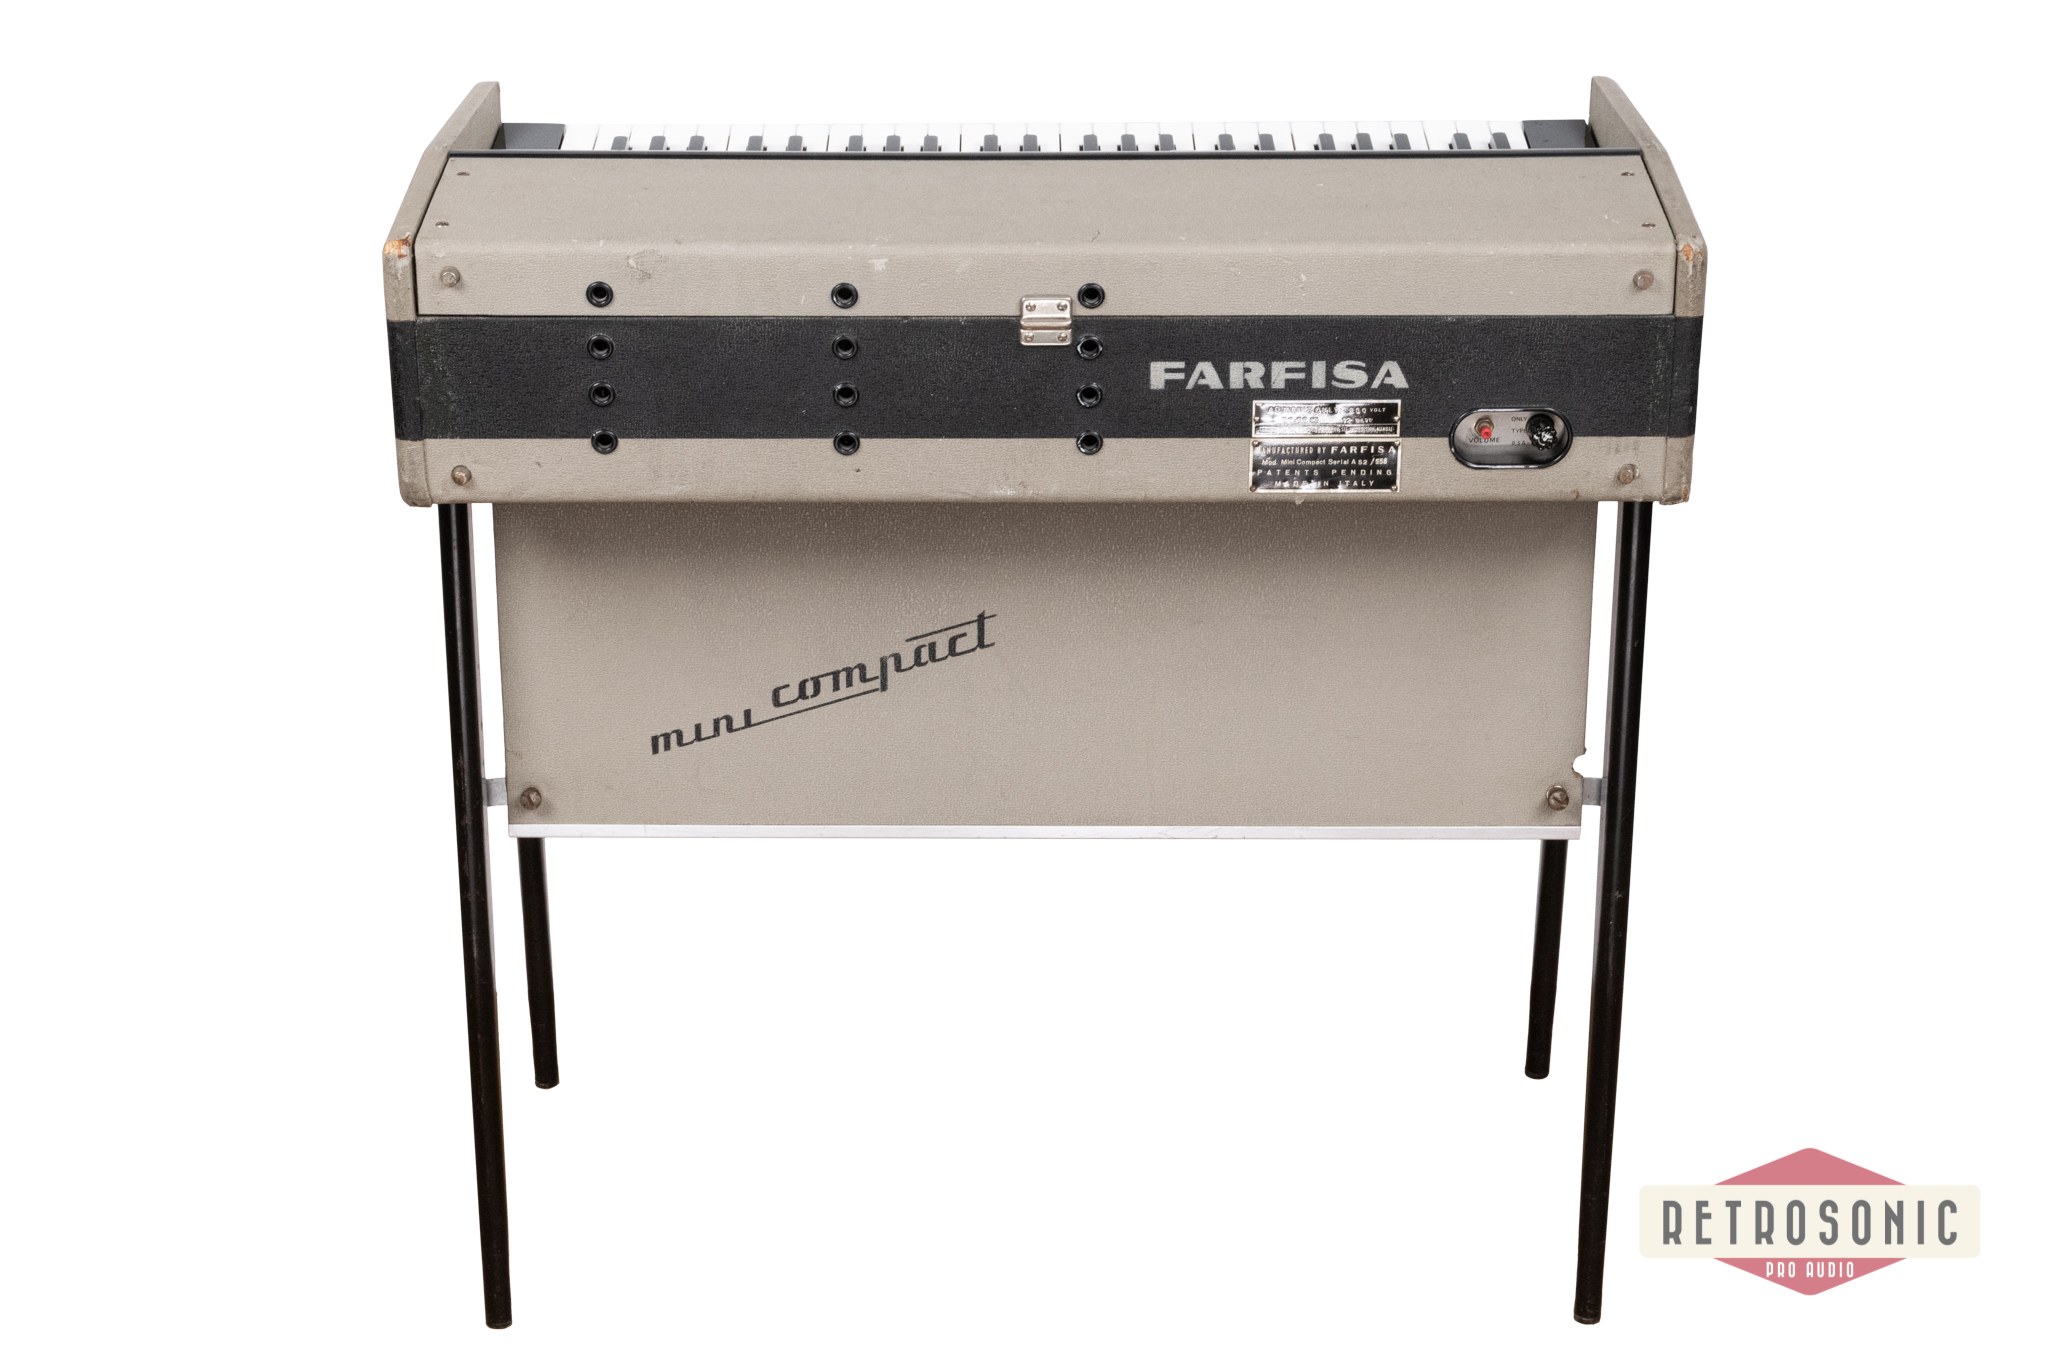 Farfisa Mini Compact Organ First Version